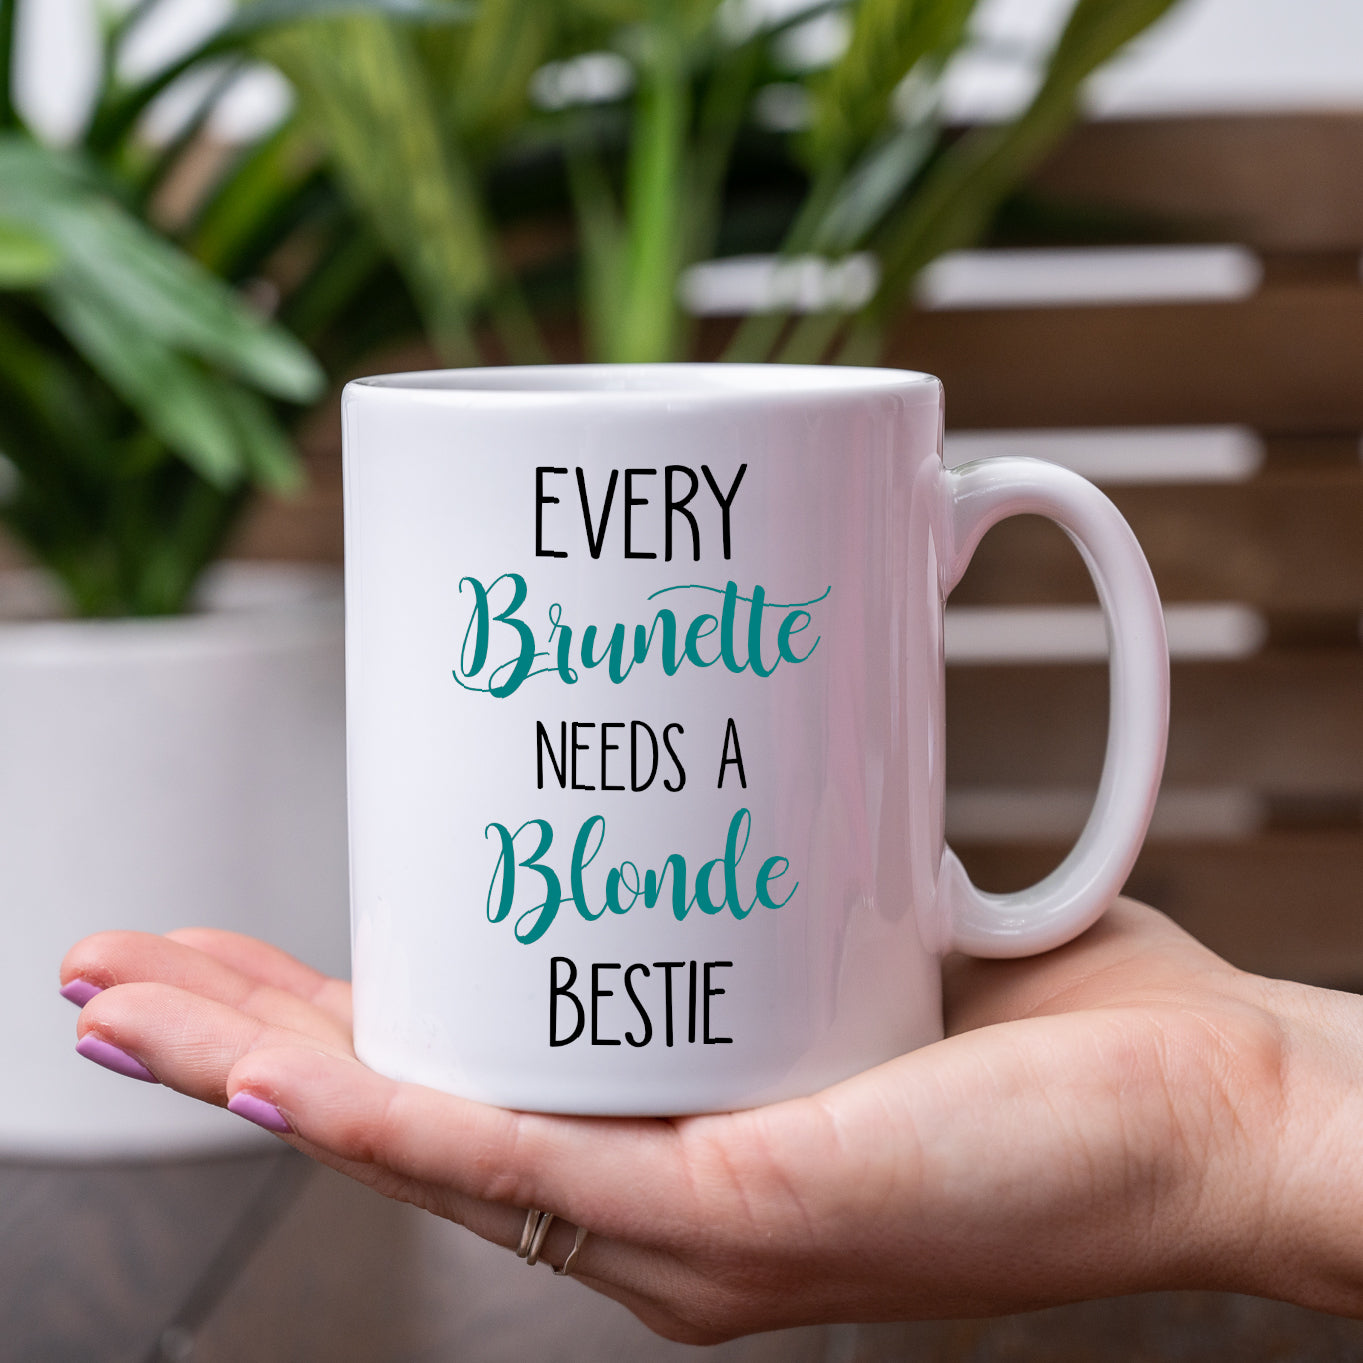 Every Brunette Needs a Blonde Bestie